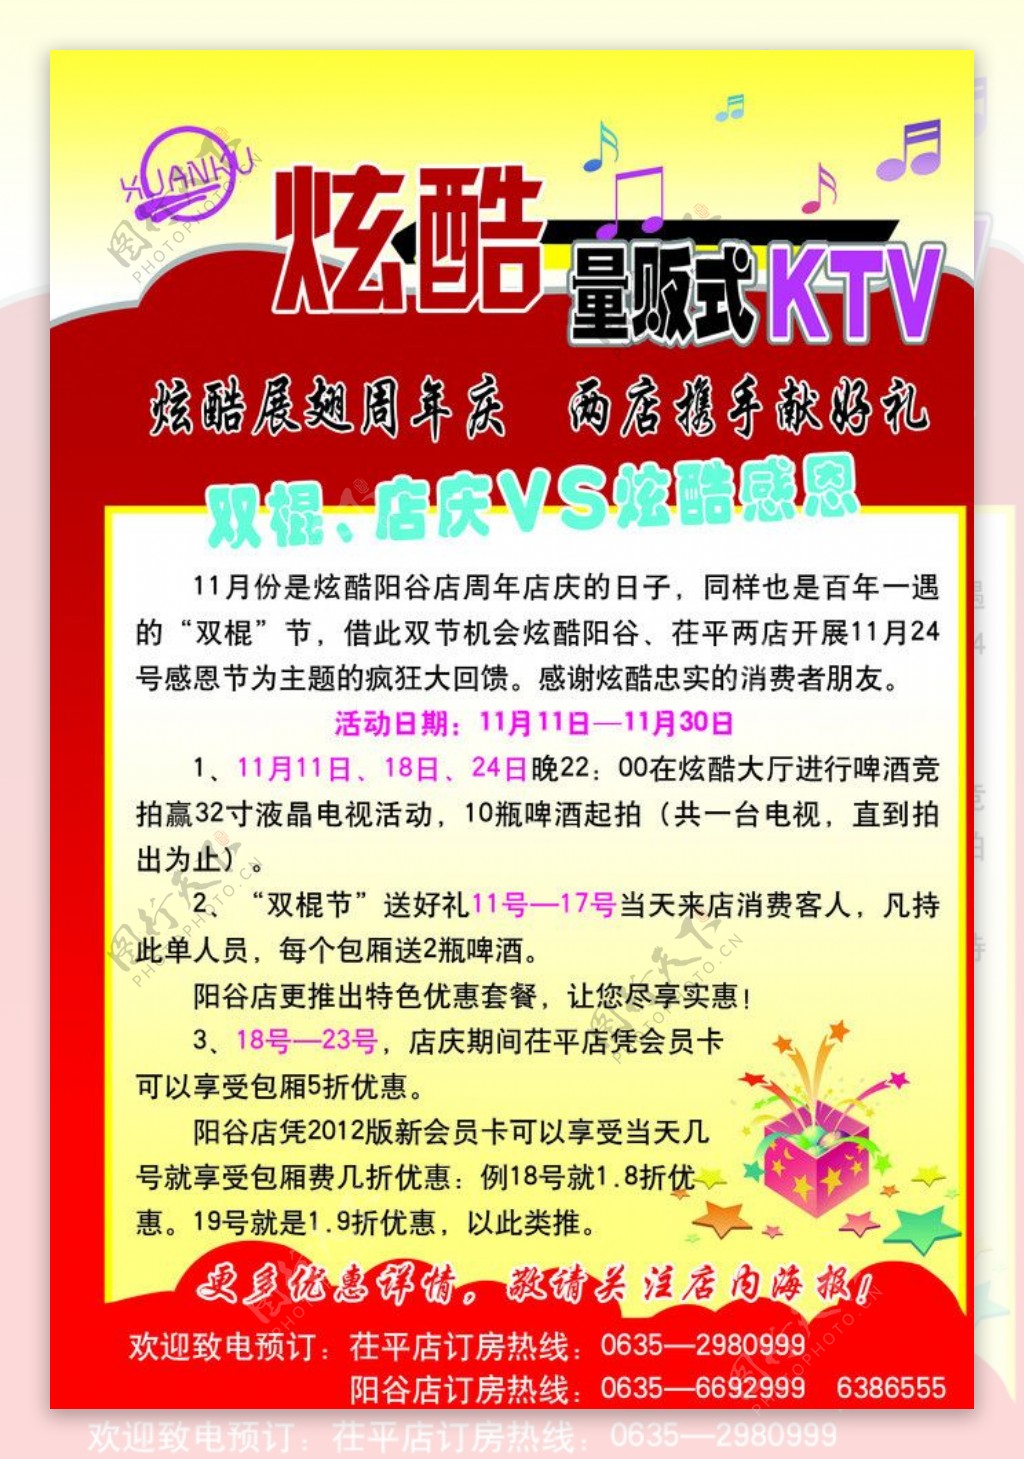 KTV周年庆彩页图片